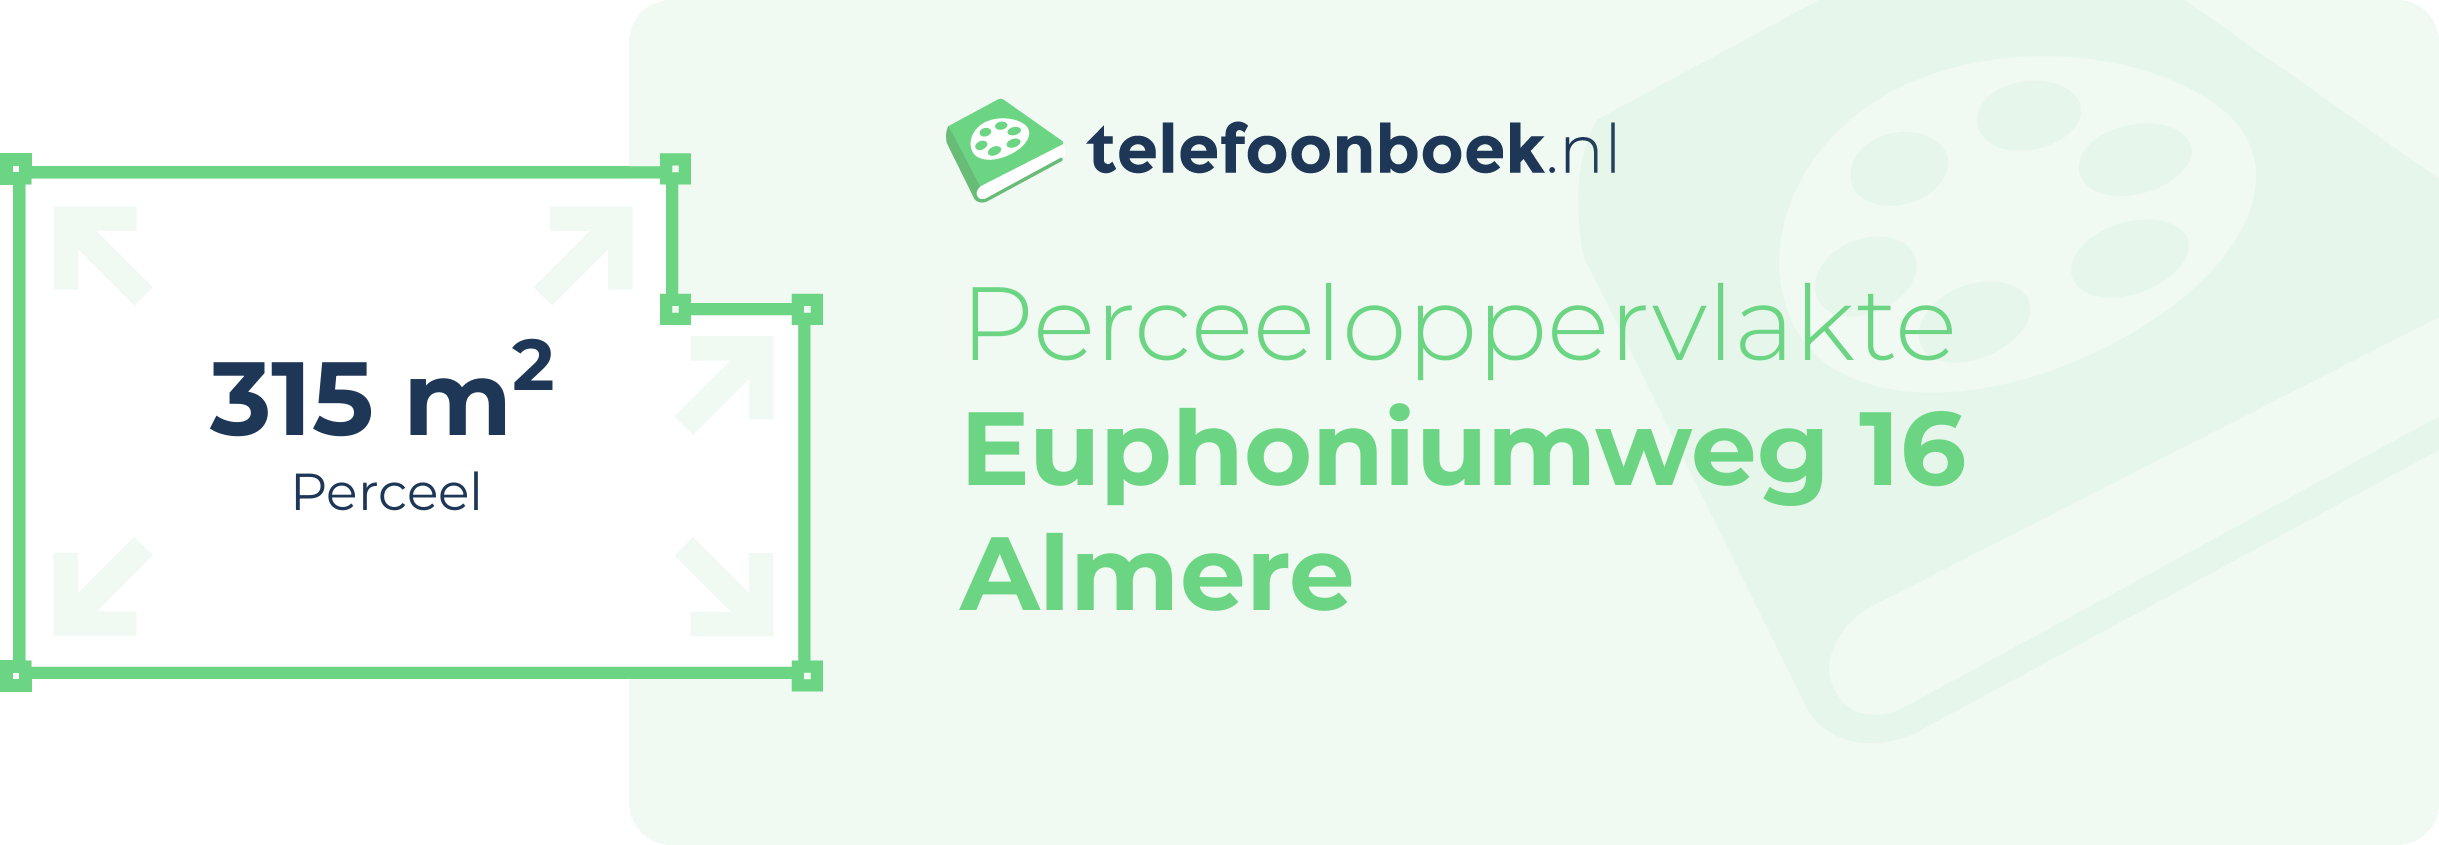 Perceeloppervlakte Euphoniumweg 16 Almere